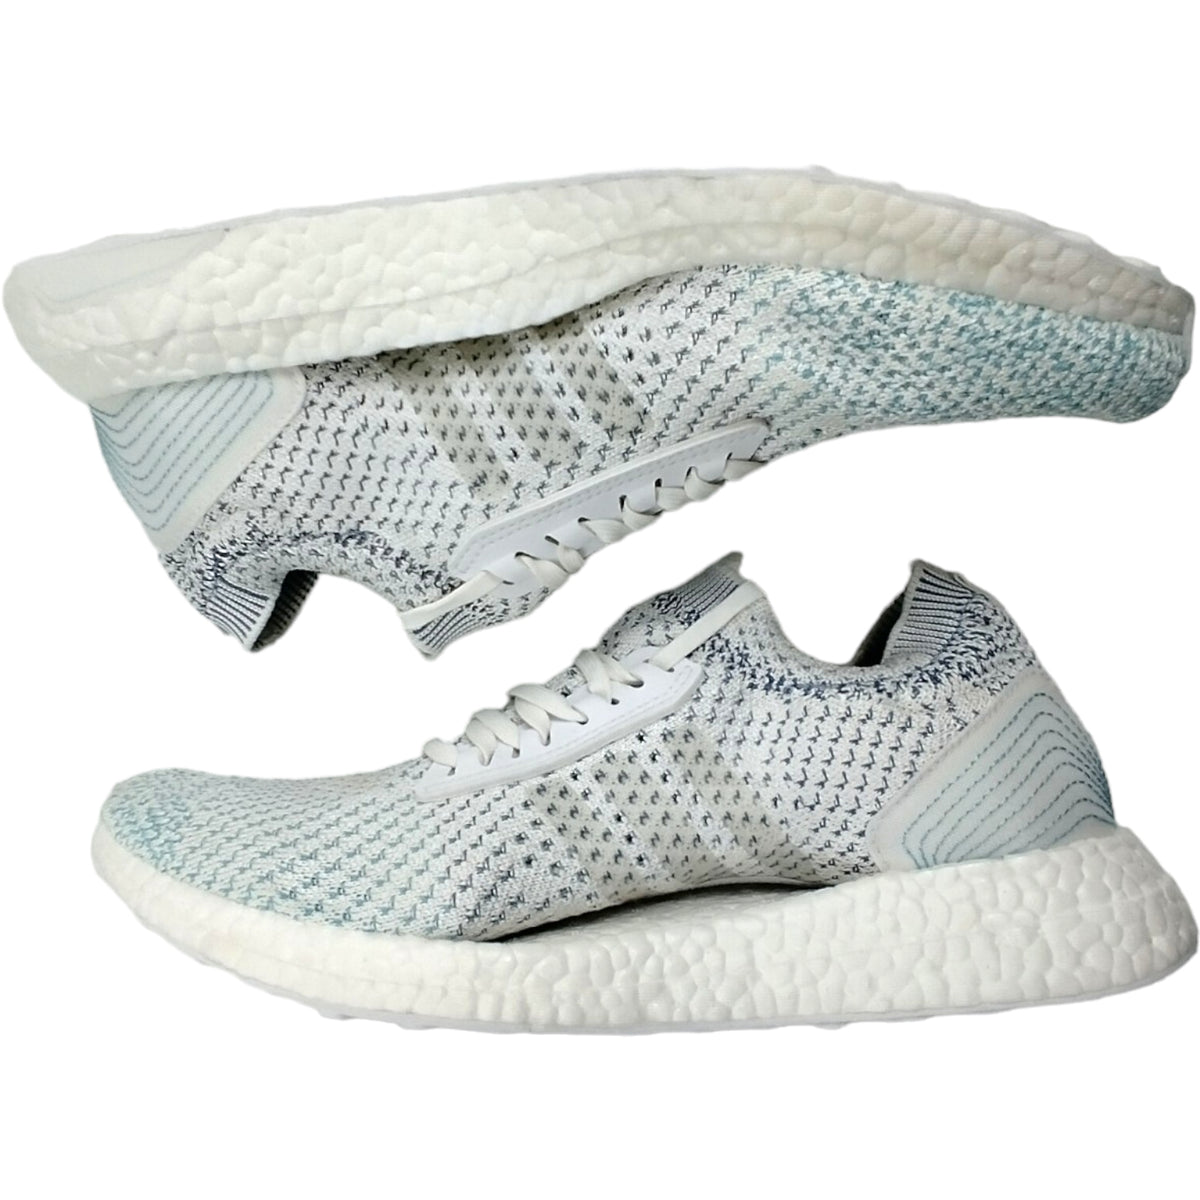 Adidas X Parley White Ultraboost Running Shoe